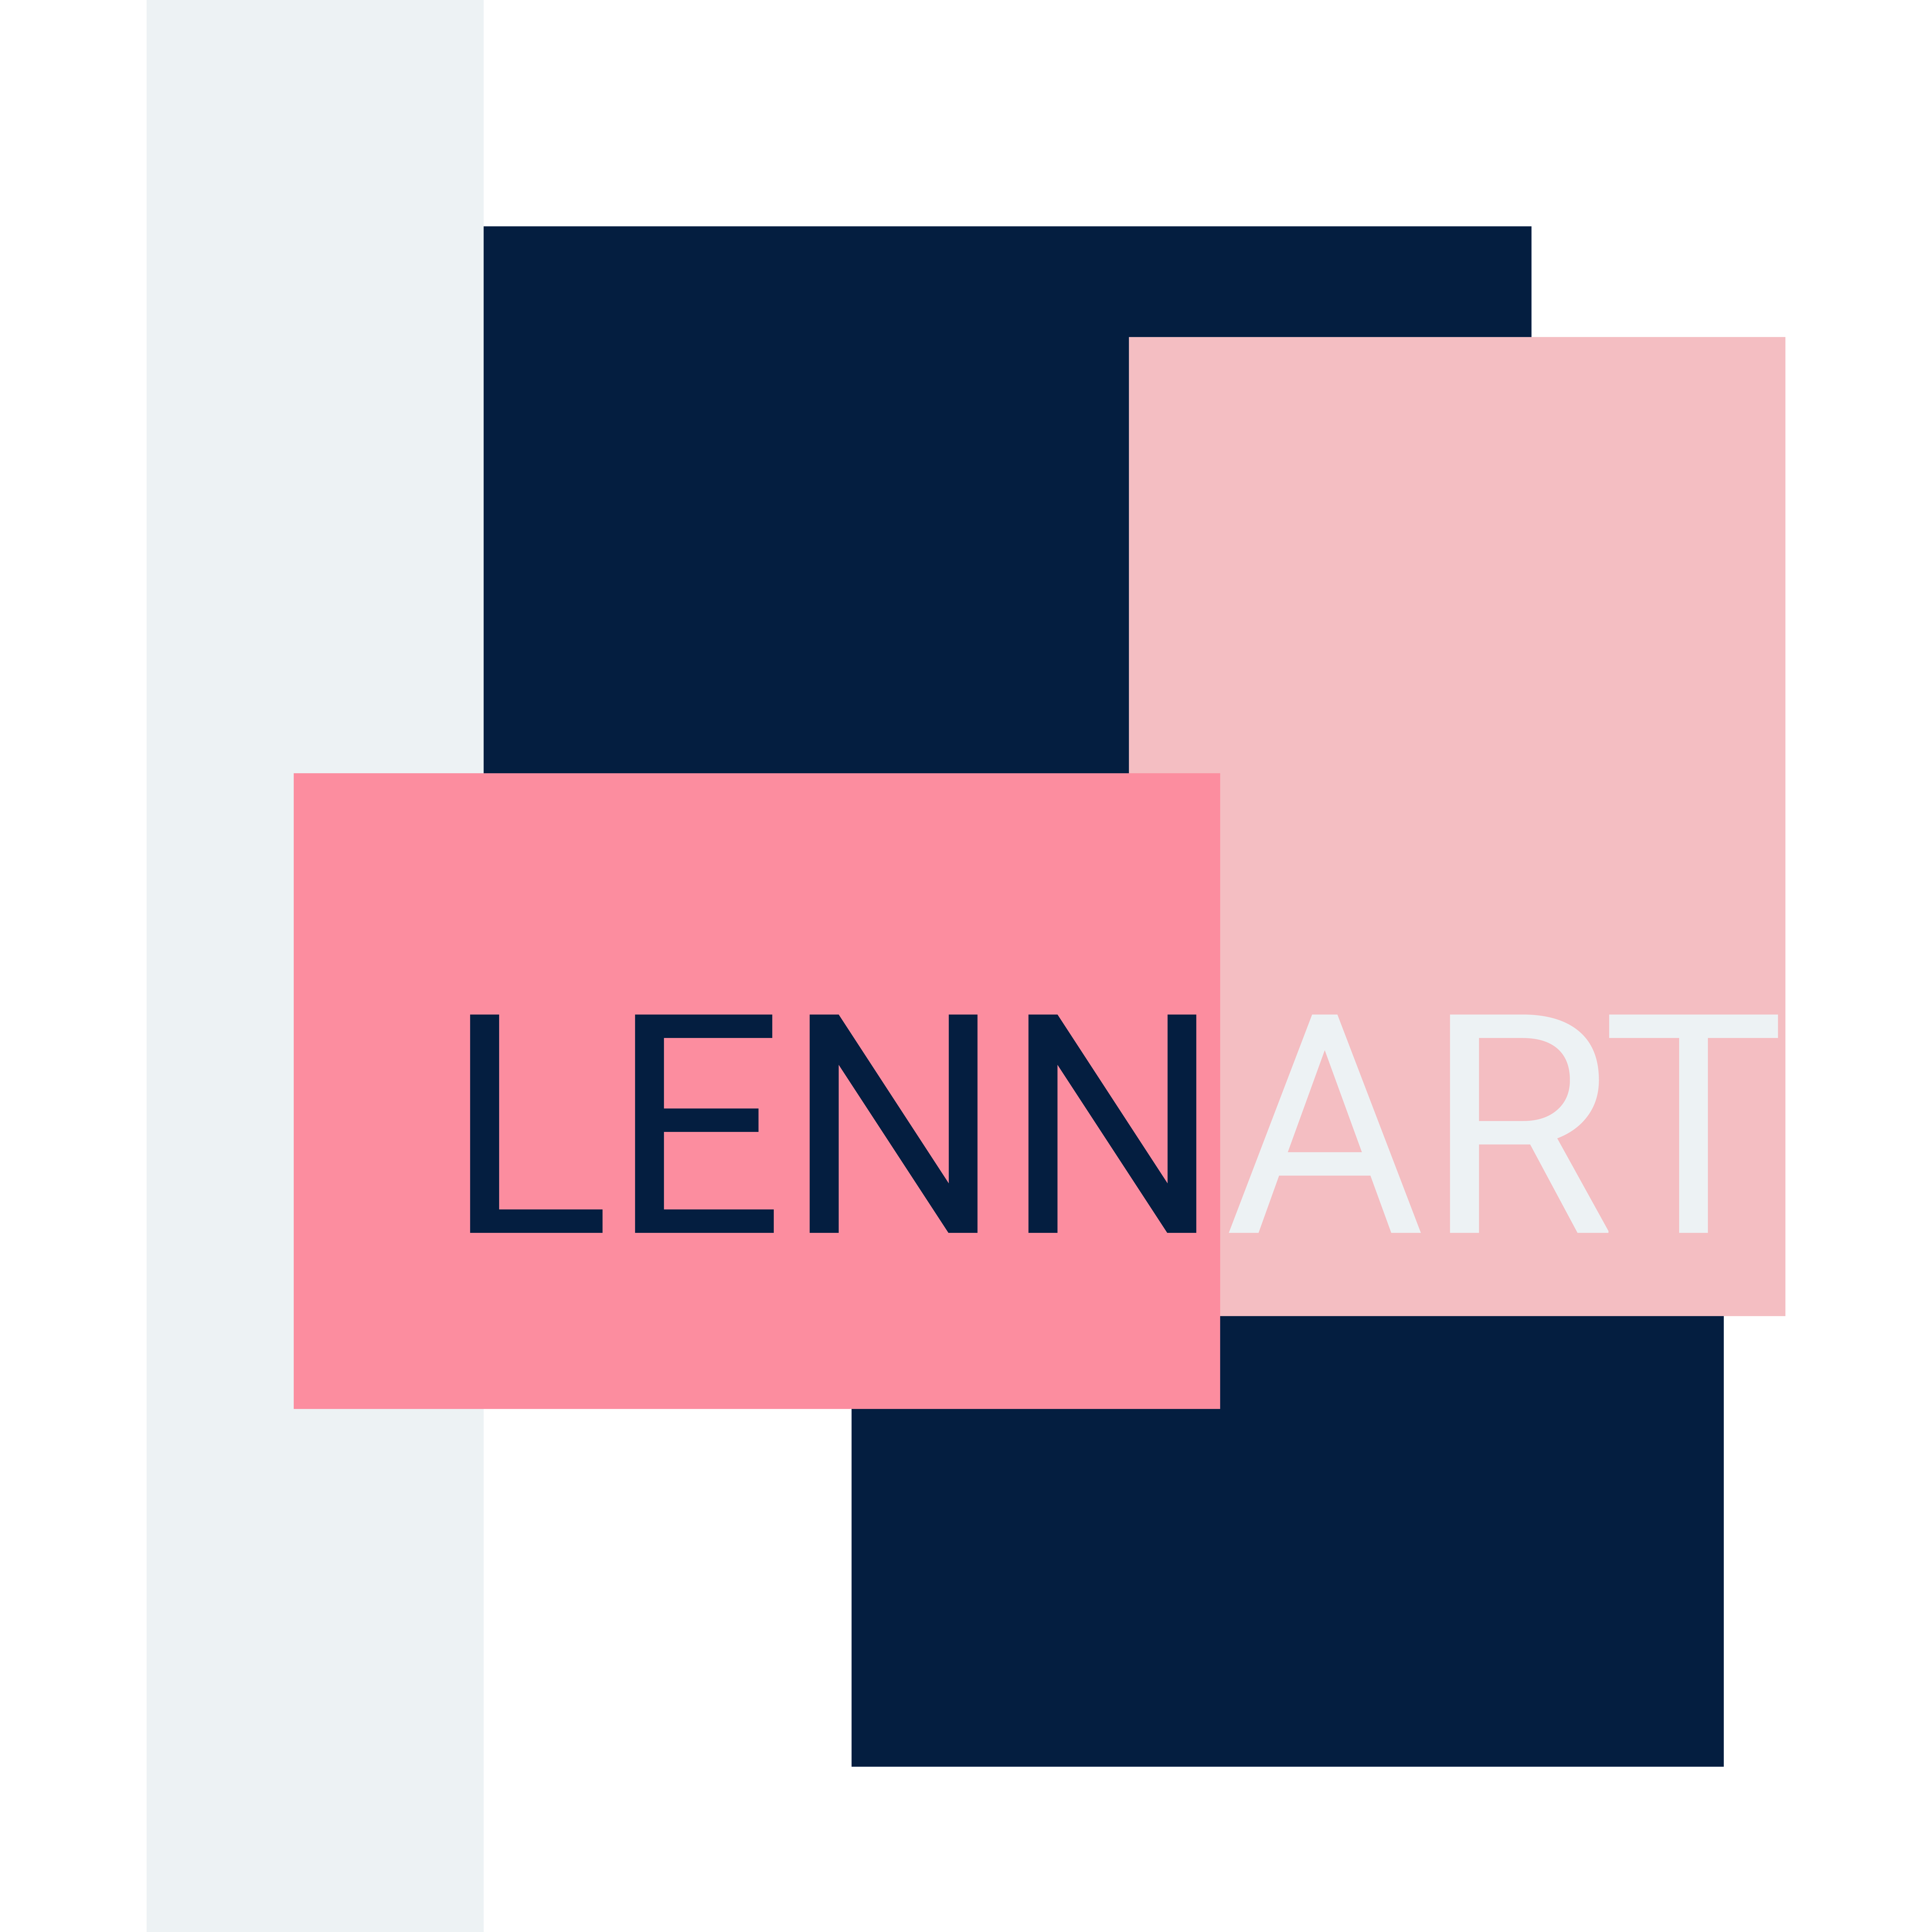 LennArt